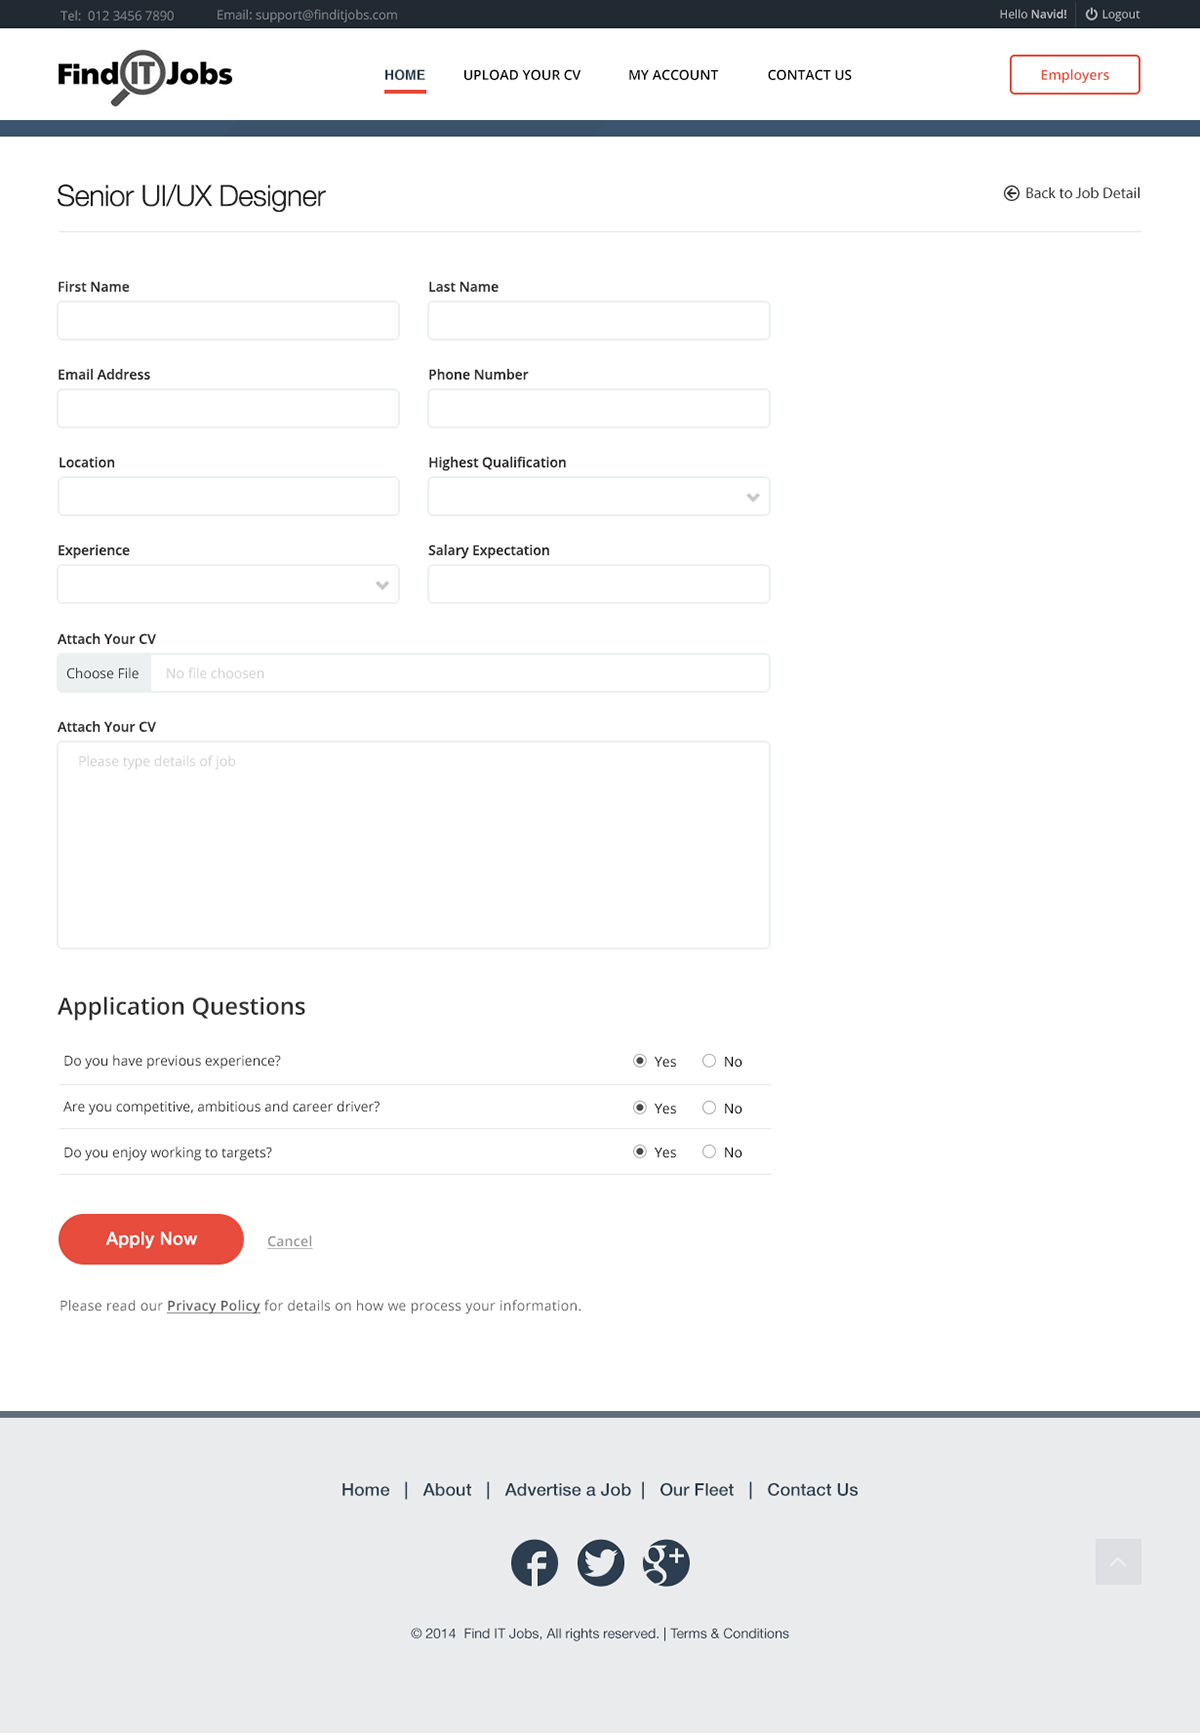 Jobs portal user interface web application